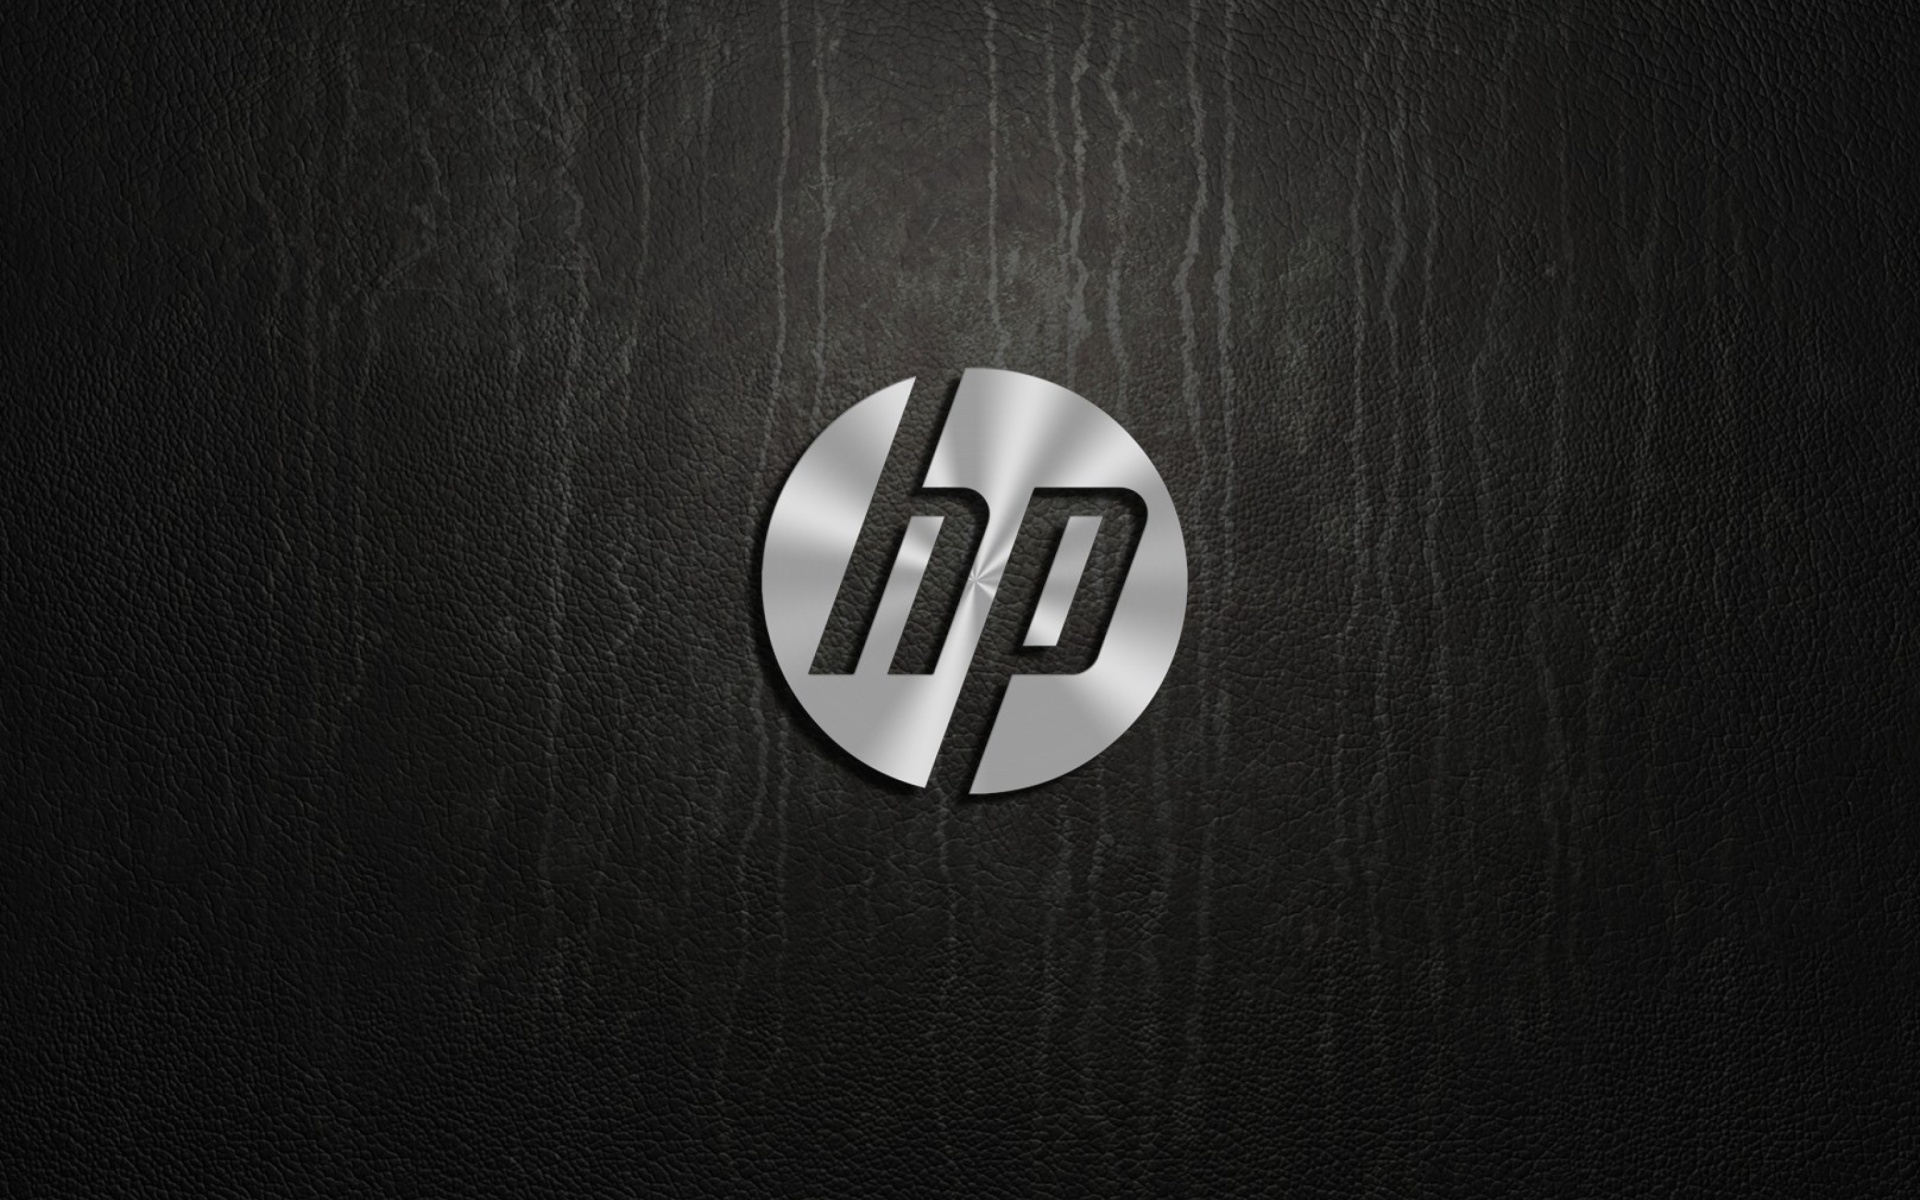 HP Dark Logo Wallpaper for Widescreen Desktop PC 1920x1080 Full HD 1920x1200